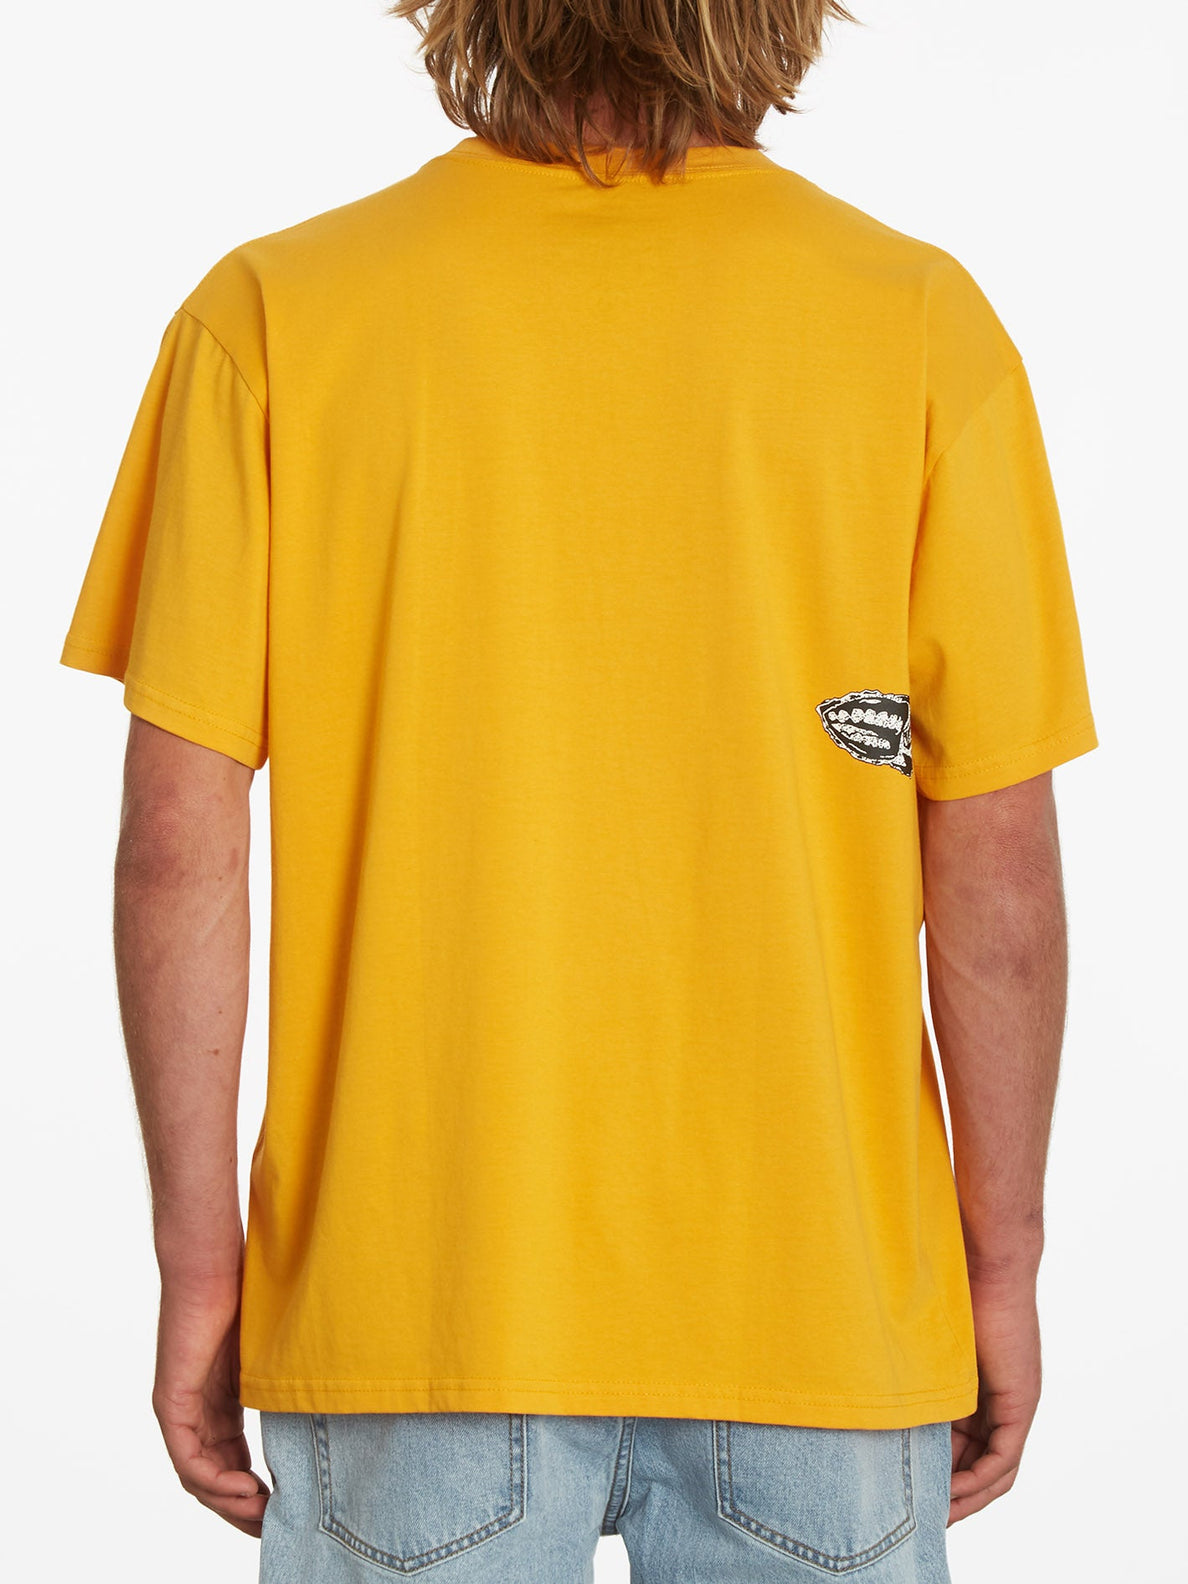 Skate Vitals Headache T-shirt - SUNBURST (A3532216_SBU) [B]